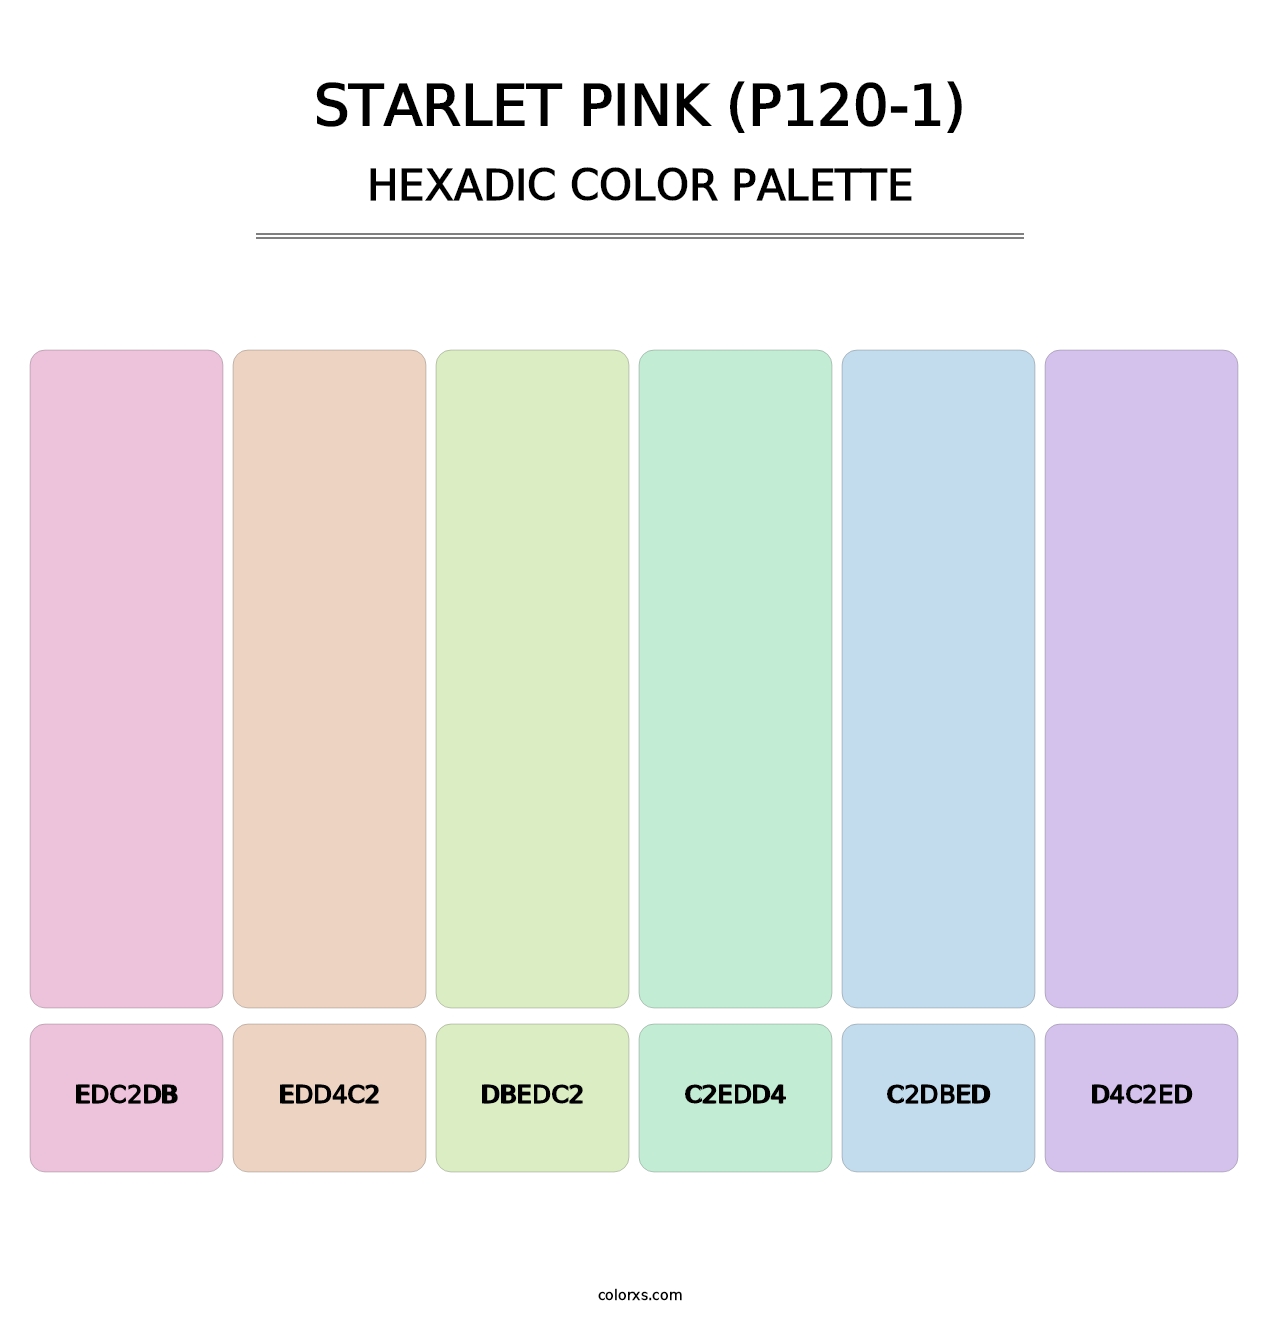 Starlet Pink (P120-1) - Hexadic Color Palette